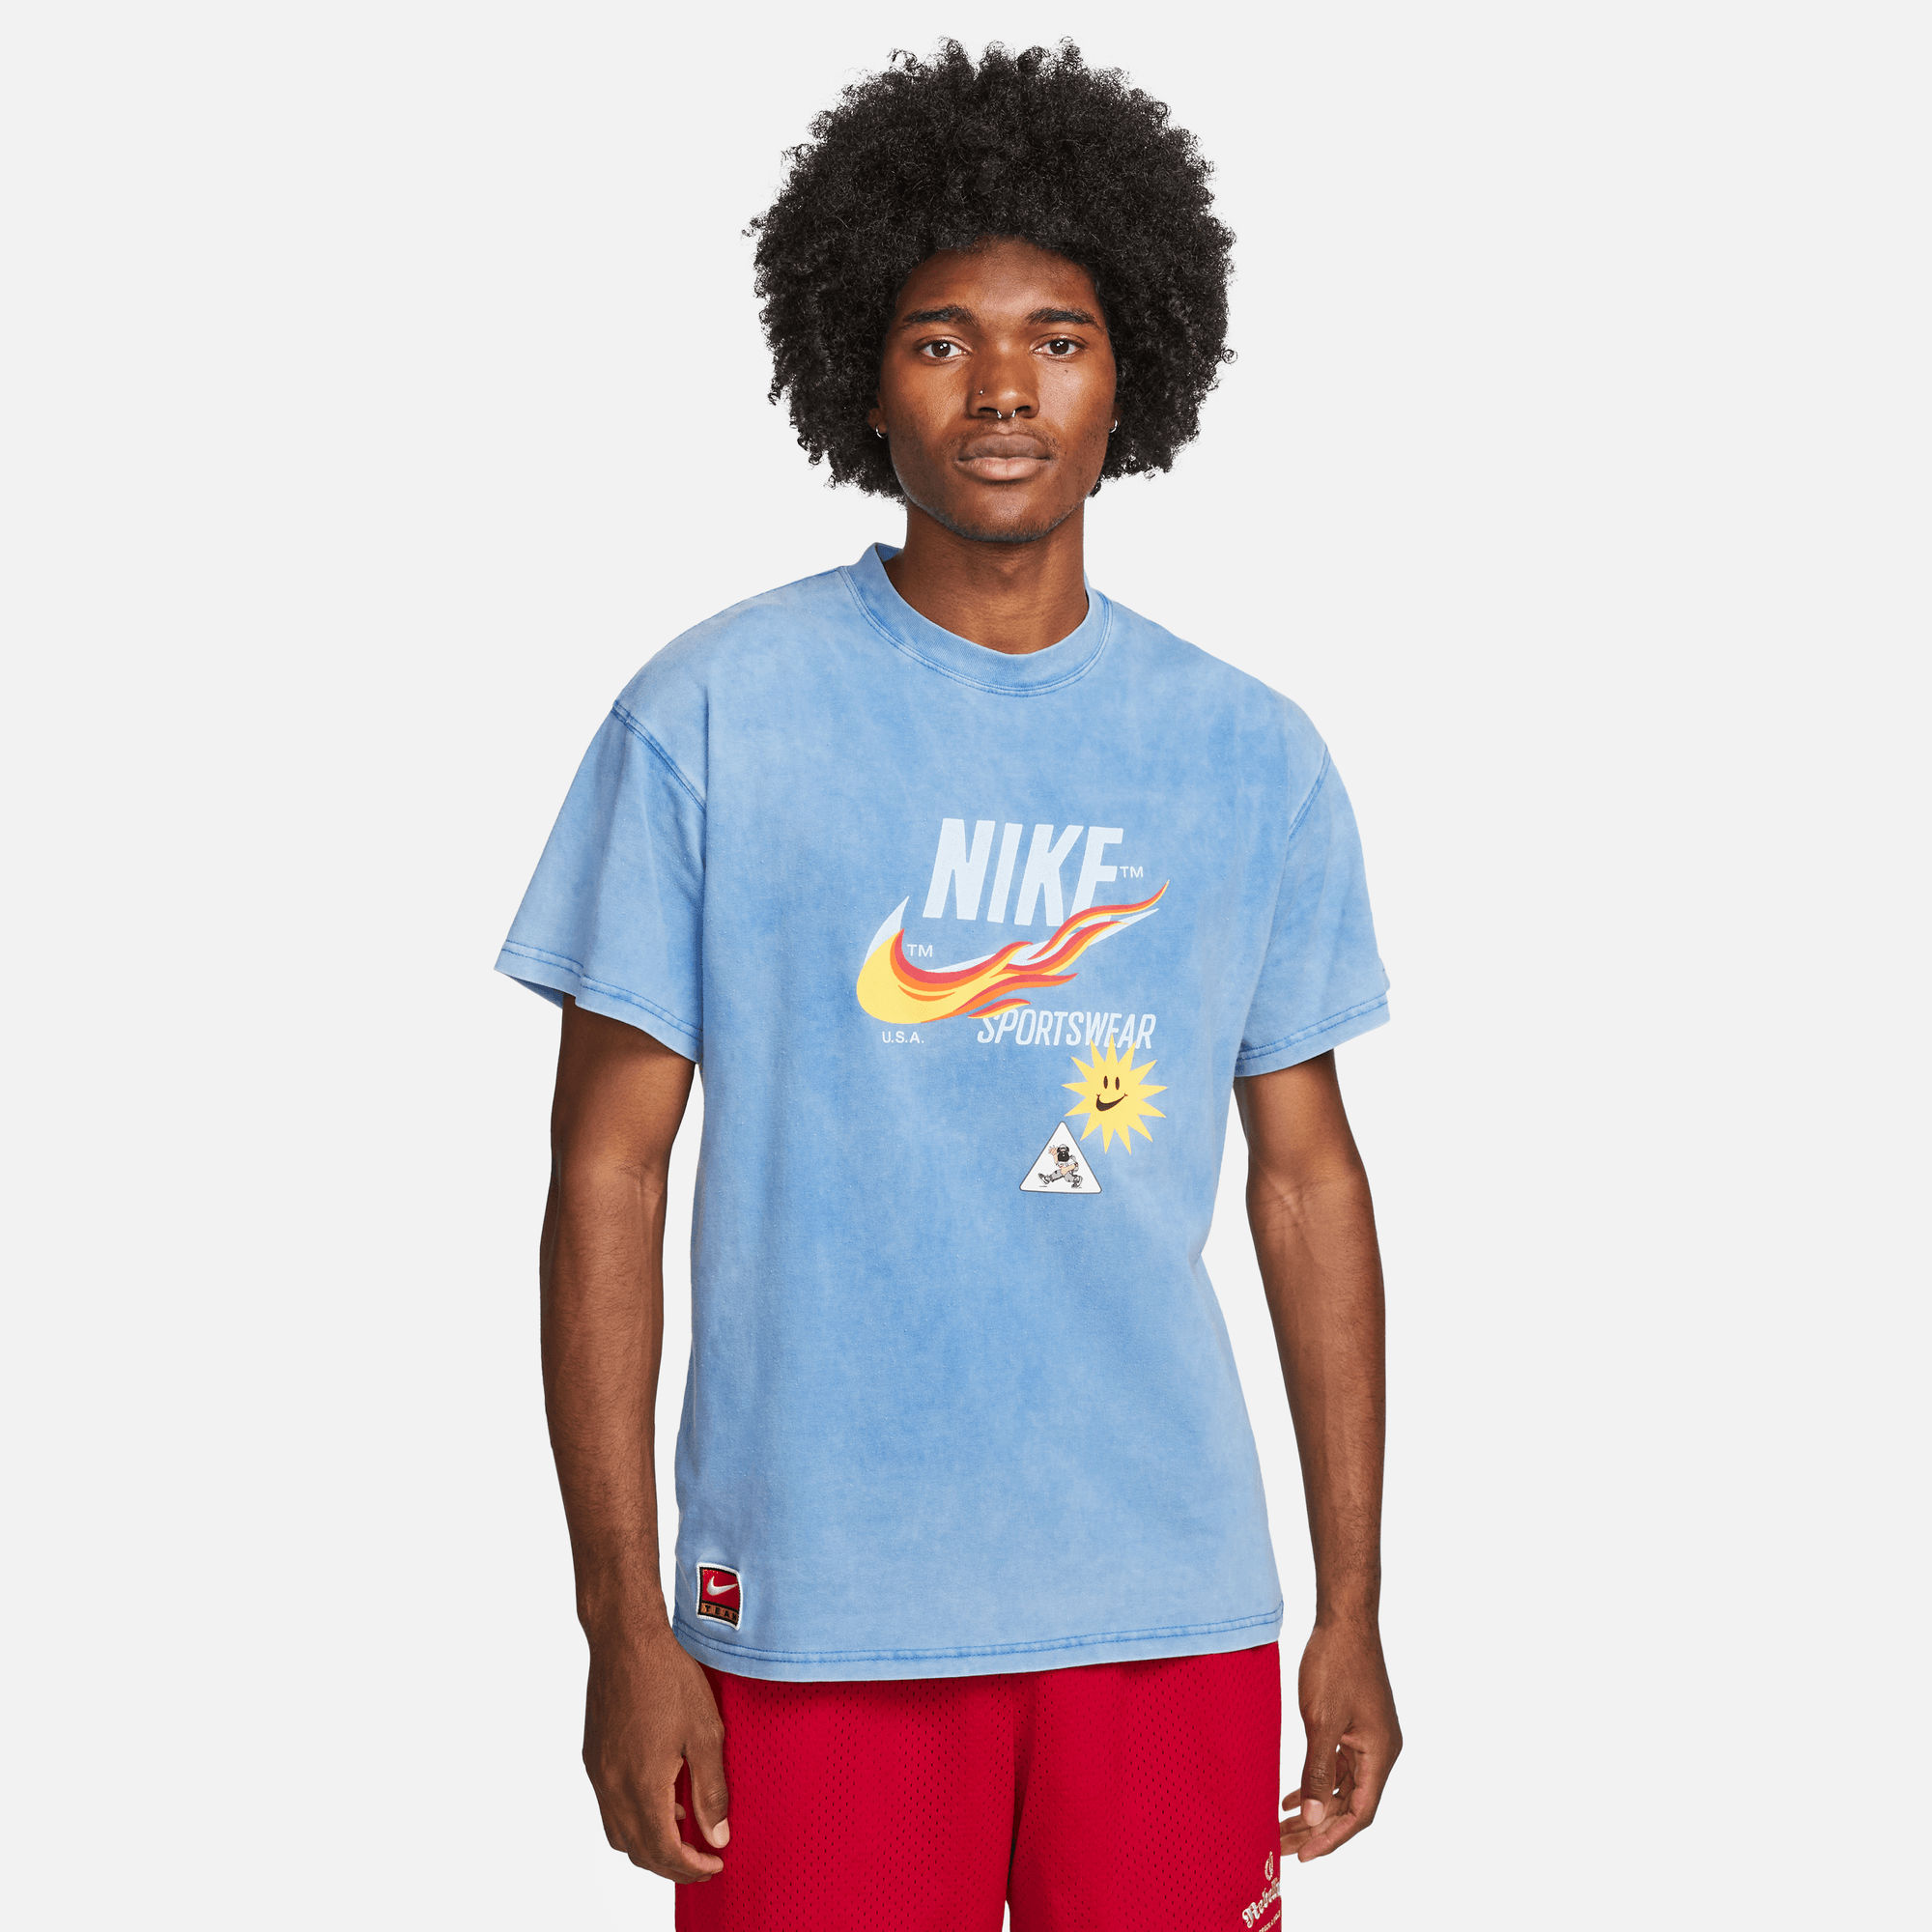 Nike APPAREL Nike Sportswear T-shirt - Men's